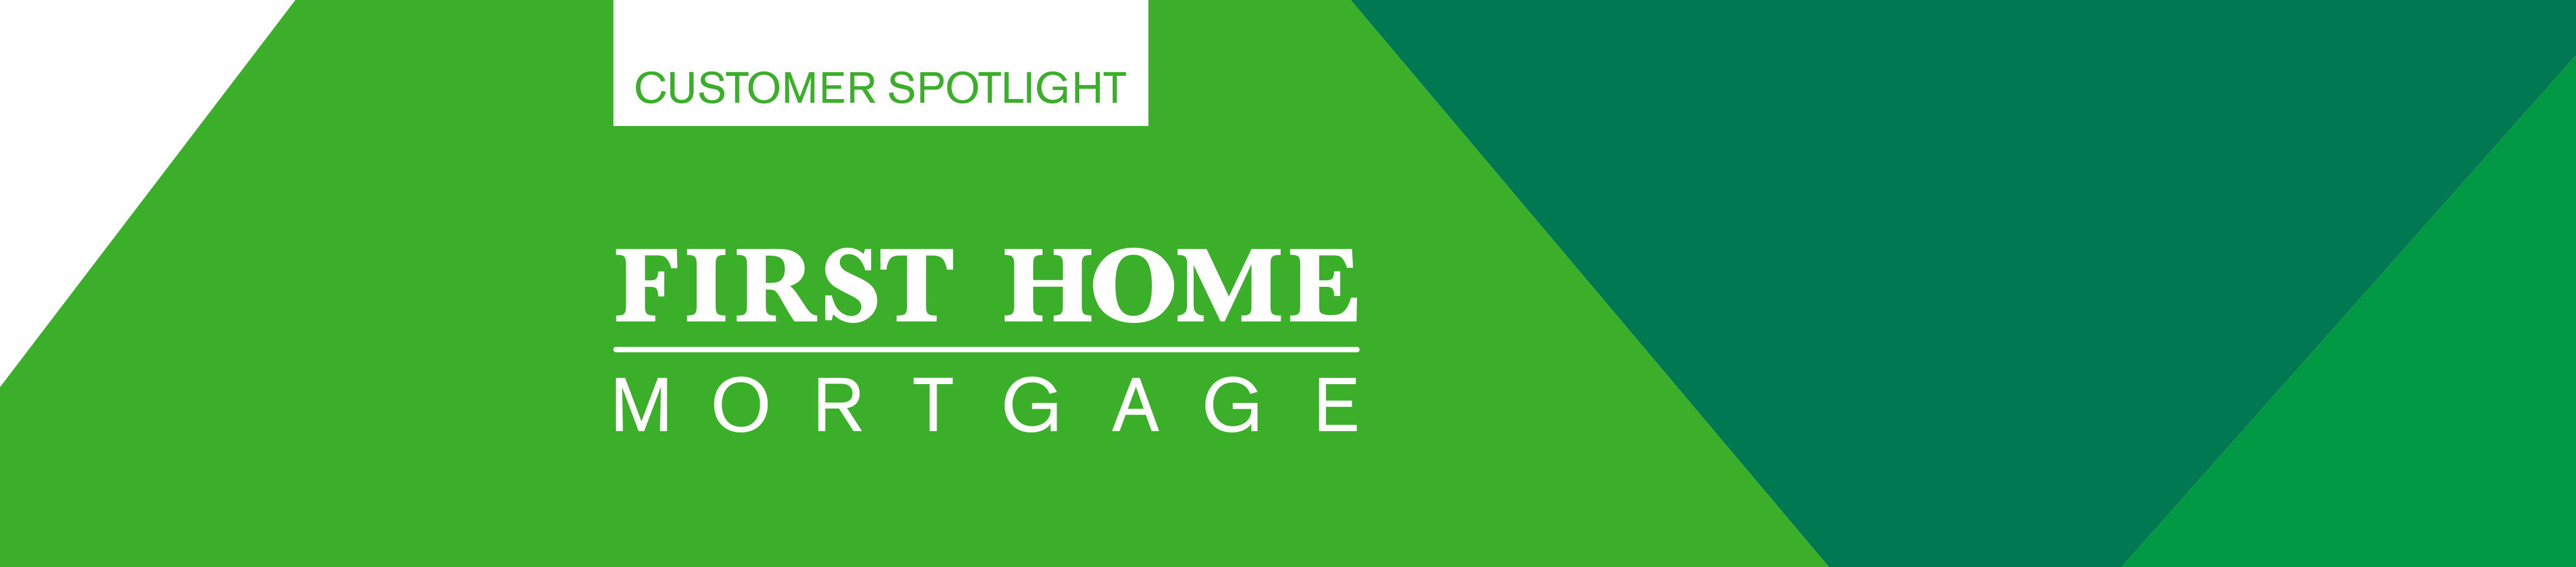 First Home Mortgage Customer Spotlight